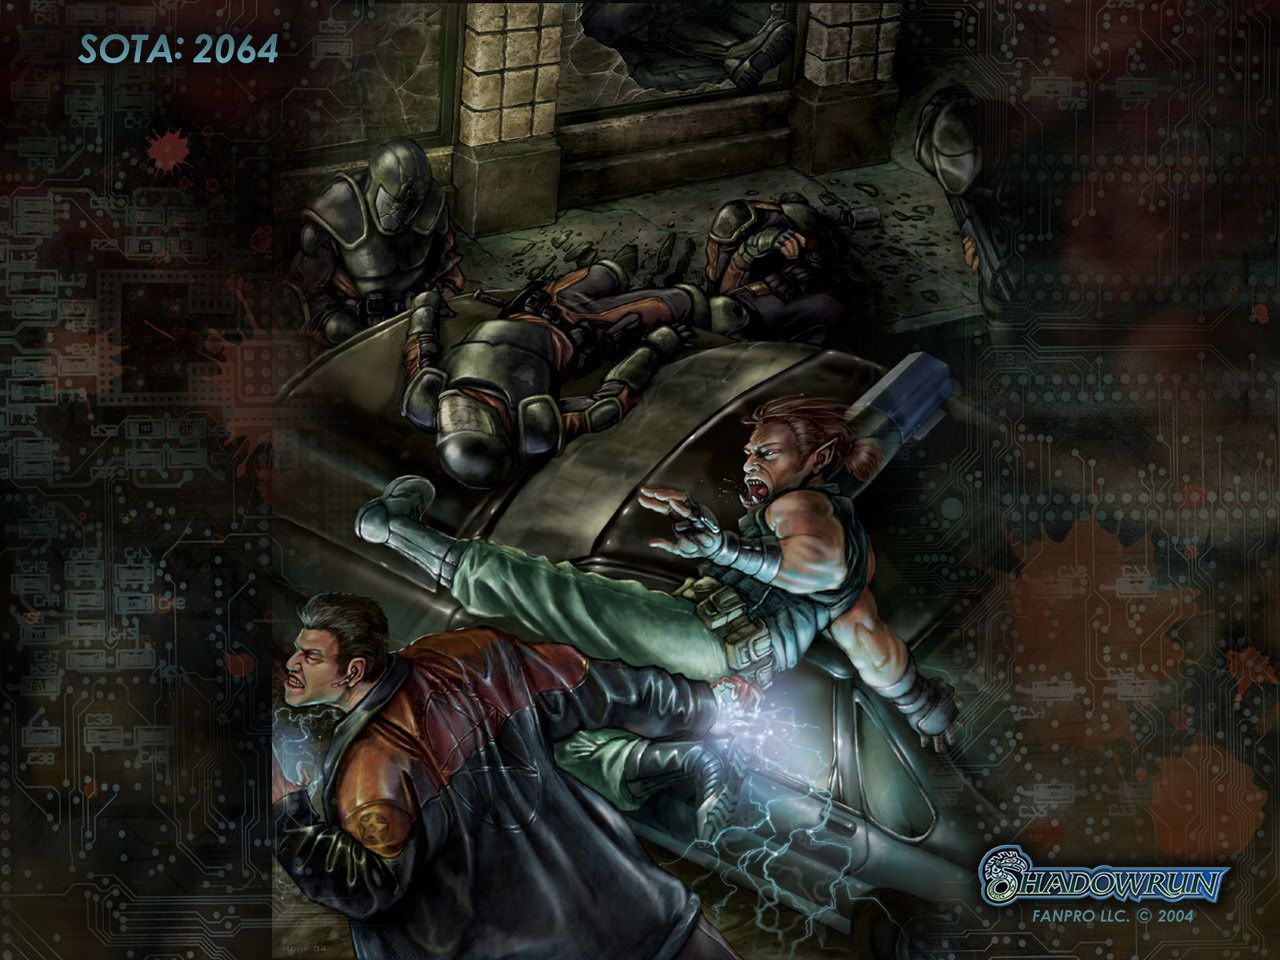 Free download Fondos de pantalla de Shadowrun Wallpaper de